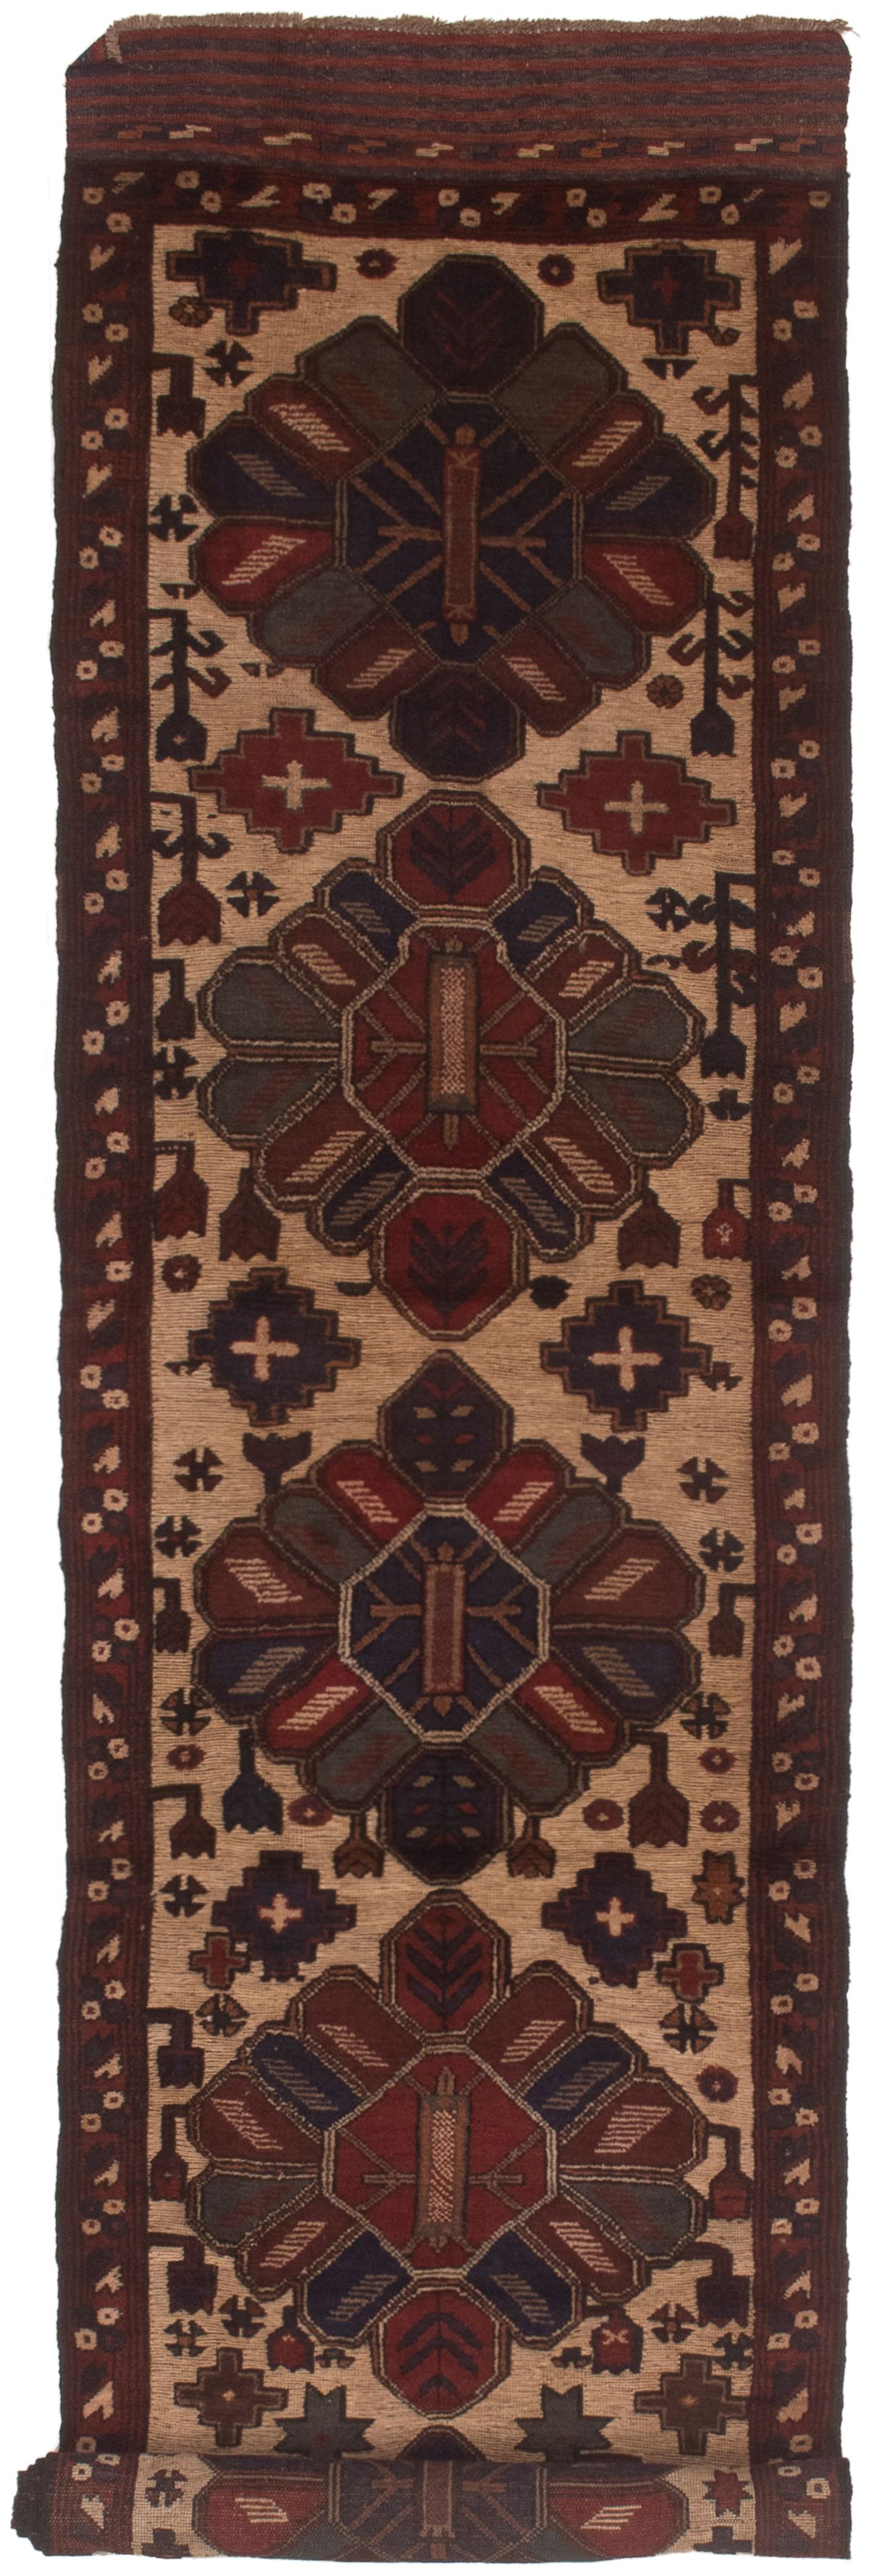 Hand-knotted Tajik Caucasian Cream, Dark Navy Wool Rug 2'9" x 12'6" Size: 2'9" x 12'6"  